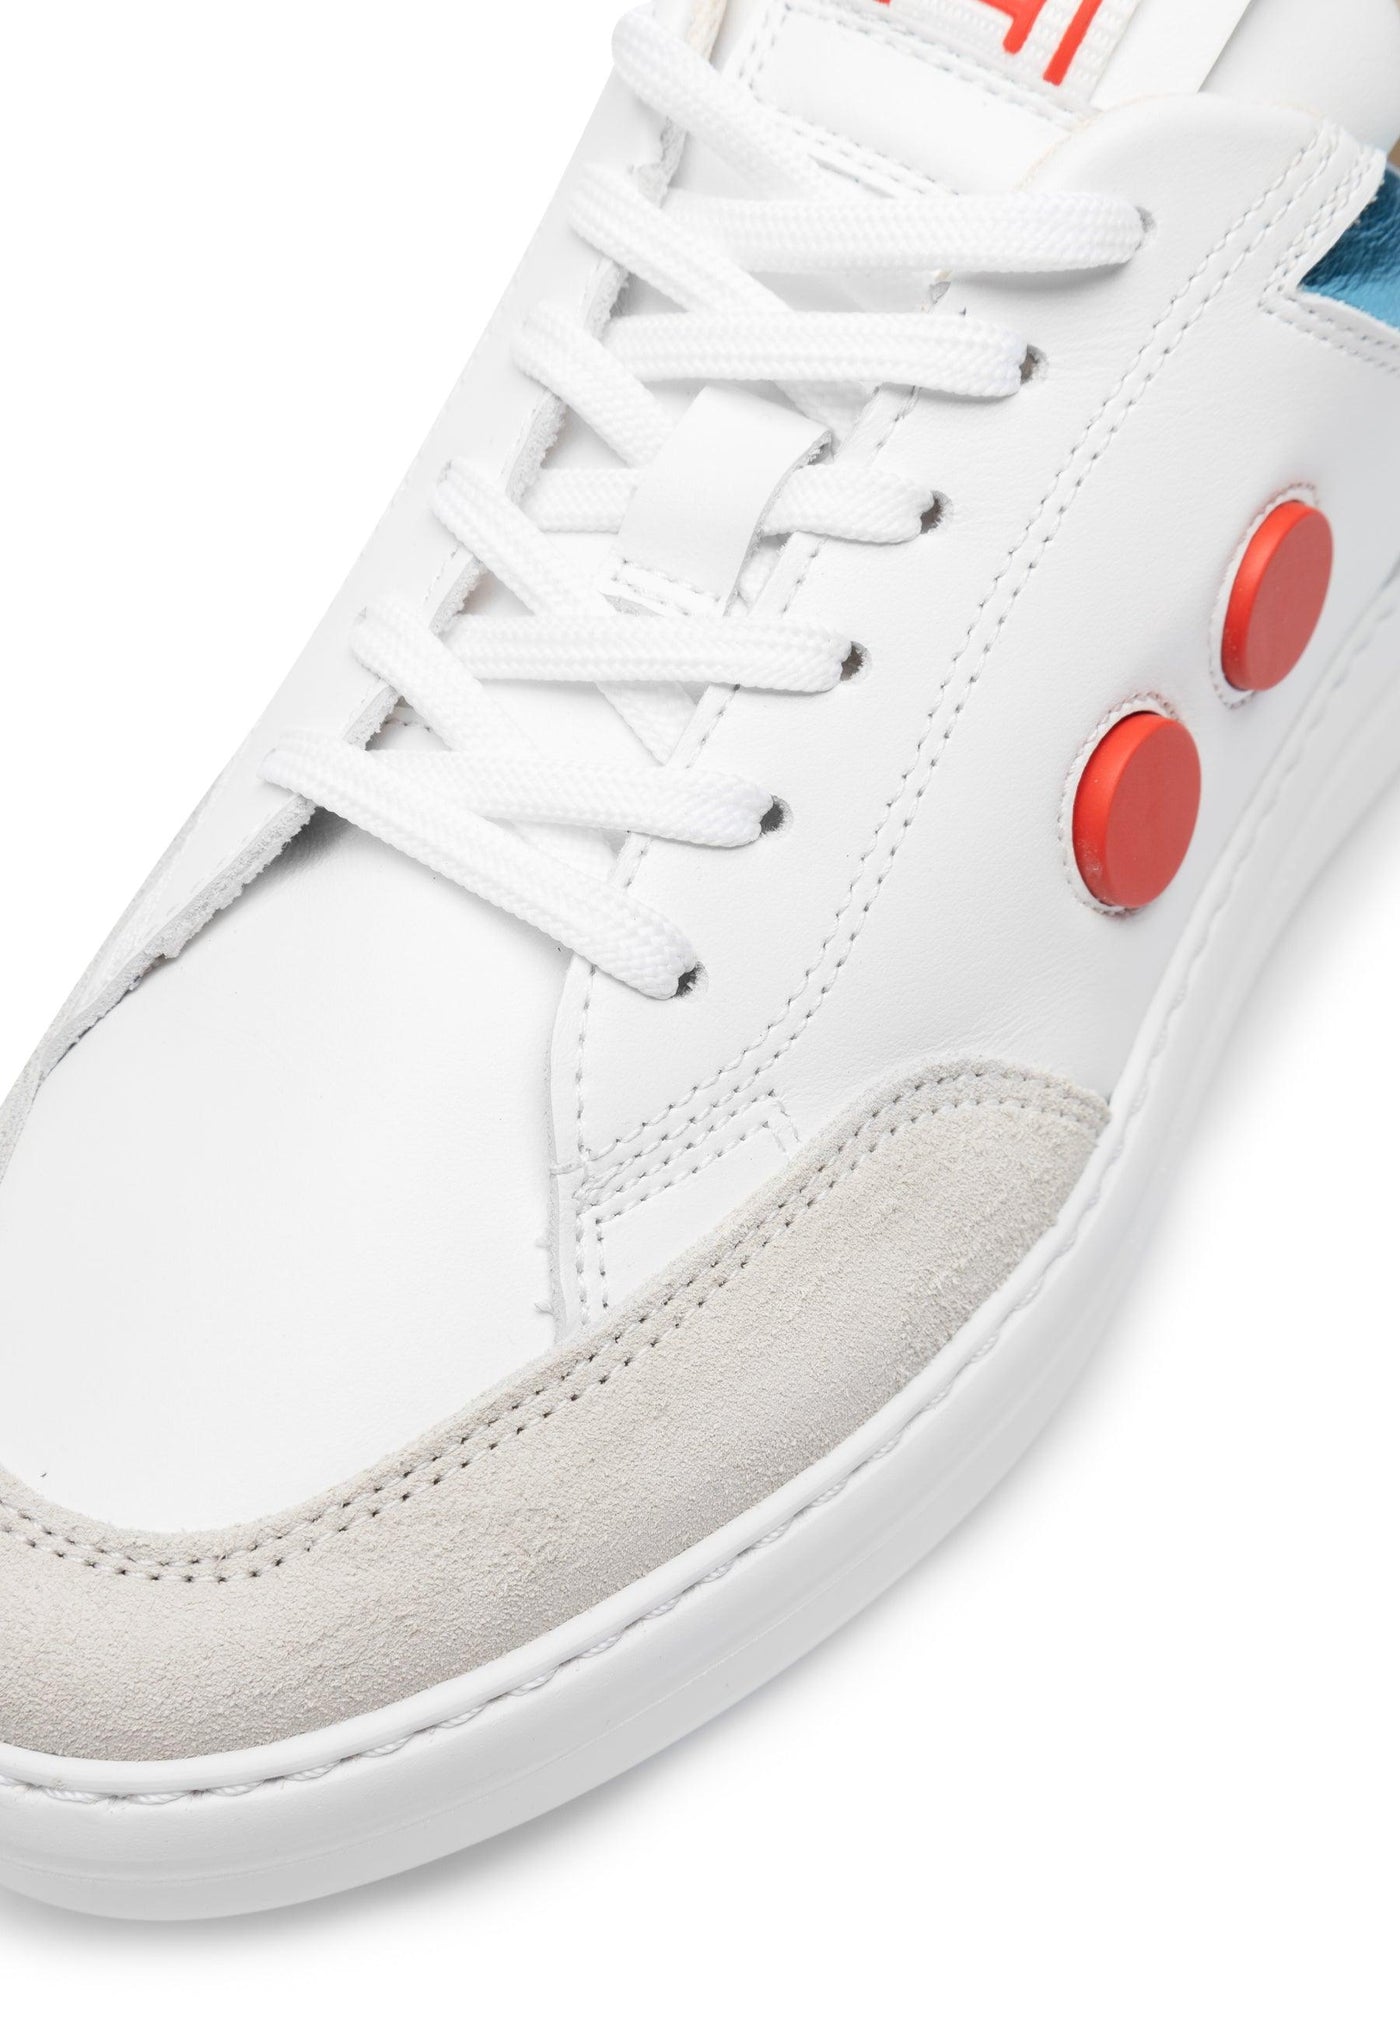 LÄST Minimalist Low - Leather - White/Blue Metallic Low Sneakers White/Blue